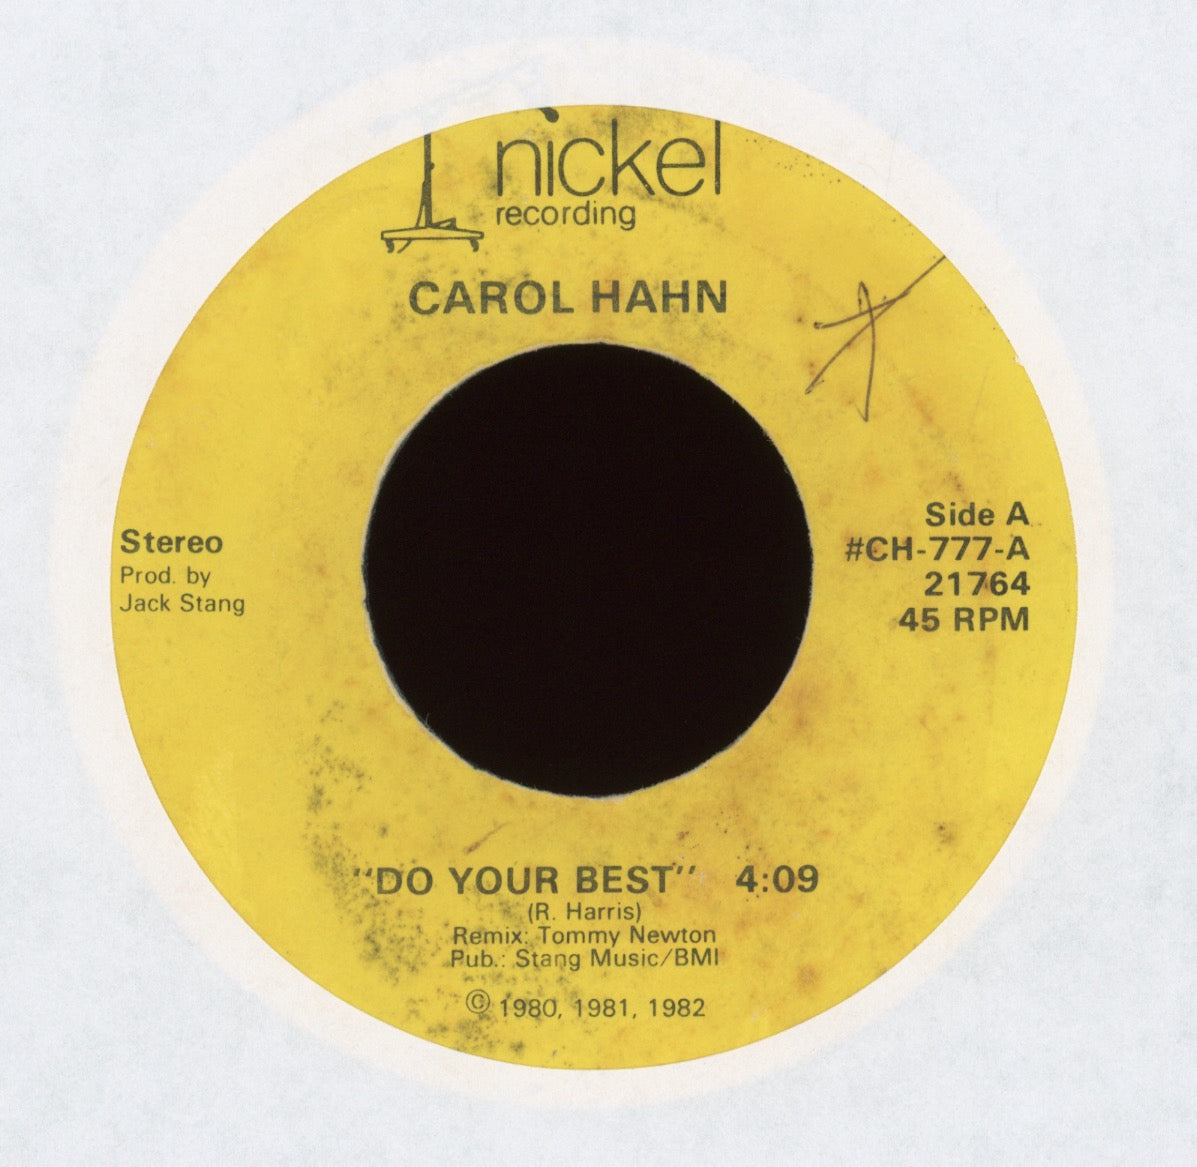 Carol Hahn - Do Your Best on Nickel Modern Soul 45